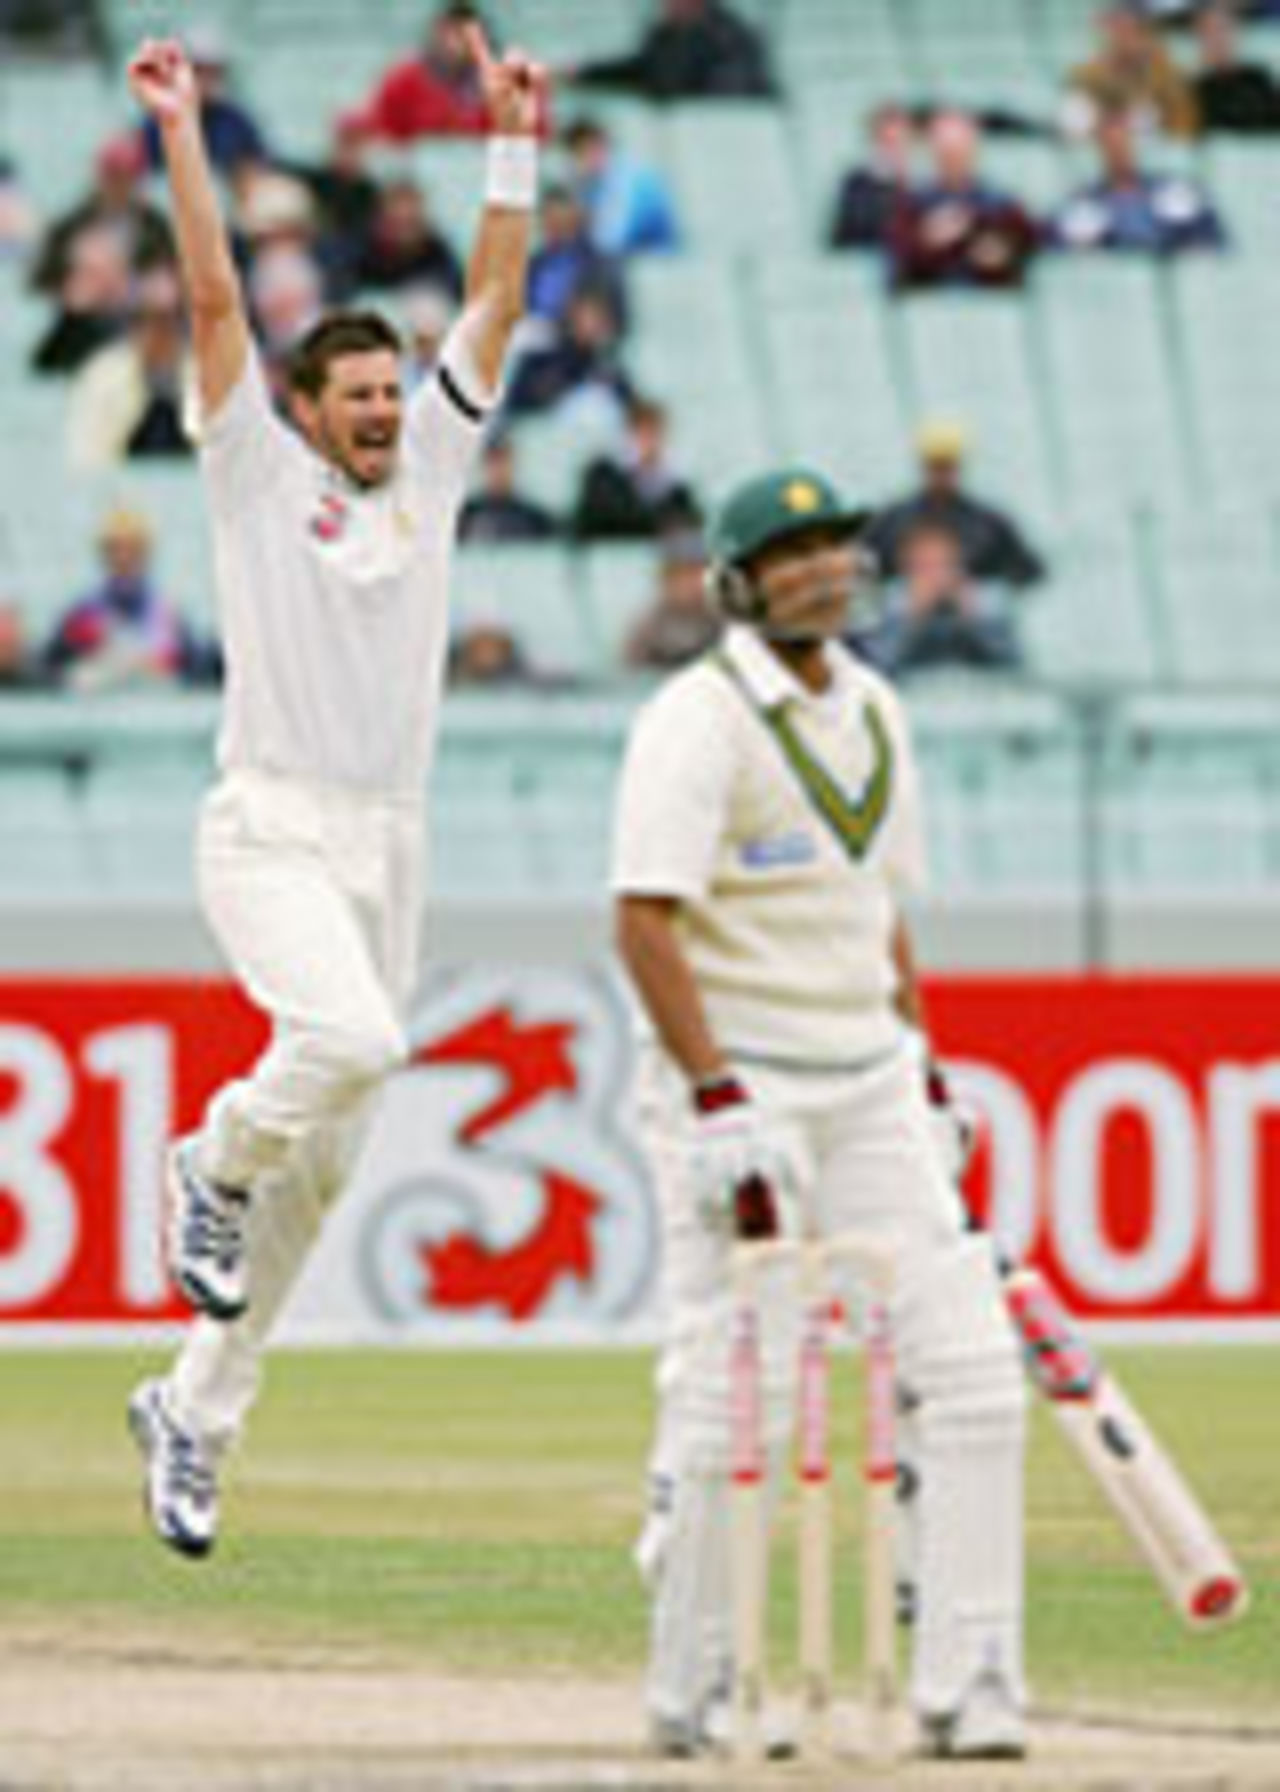 Michael Kasprowicz happy dismissing Younis Khan, Australia v Pakistan, 2nd Test, Melbourne, 3rd day, December 28 2004